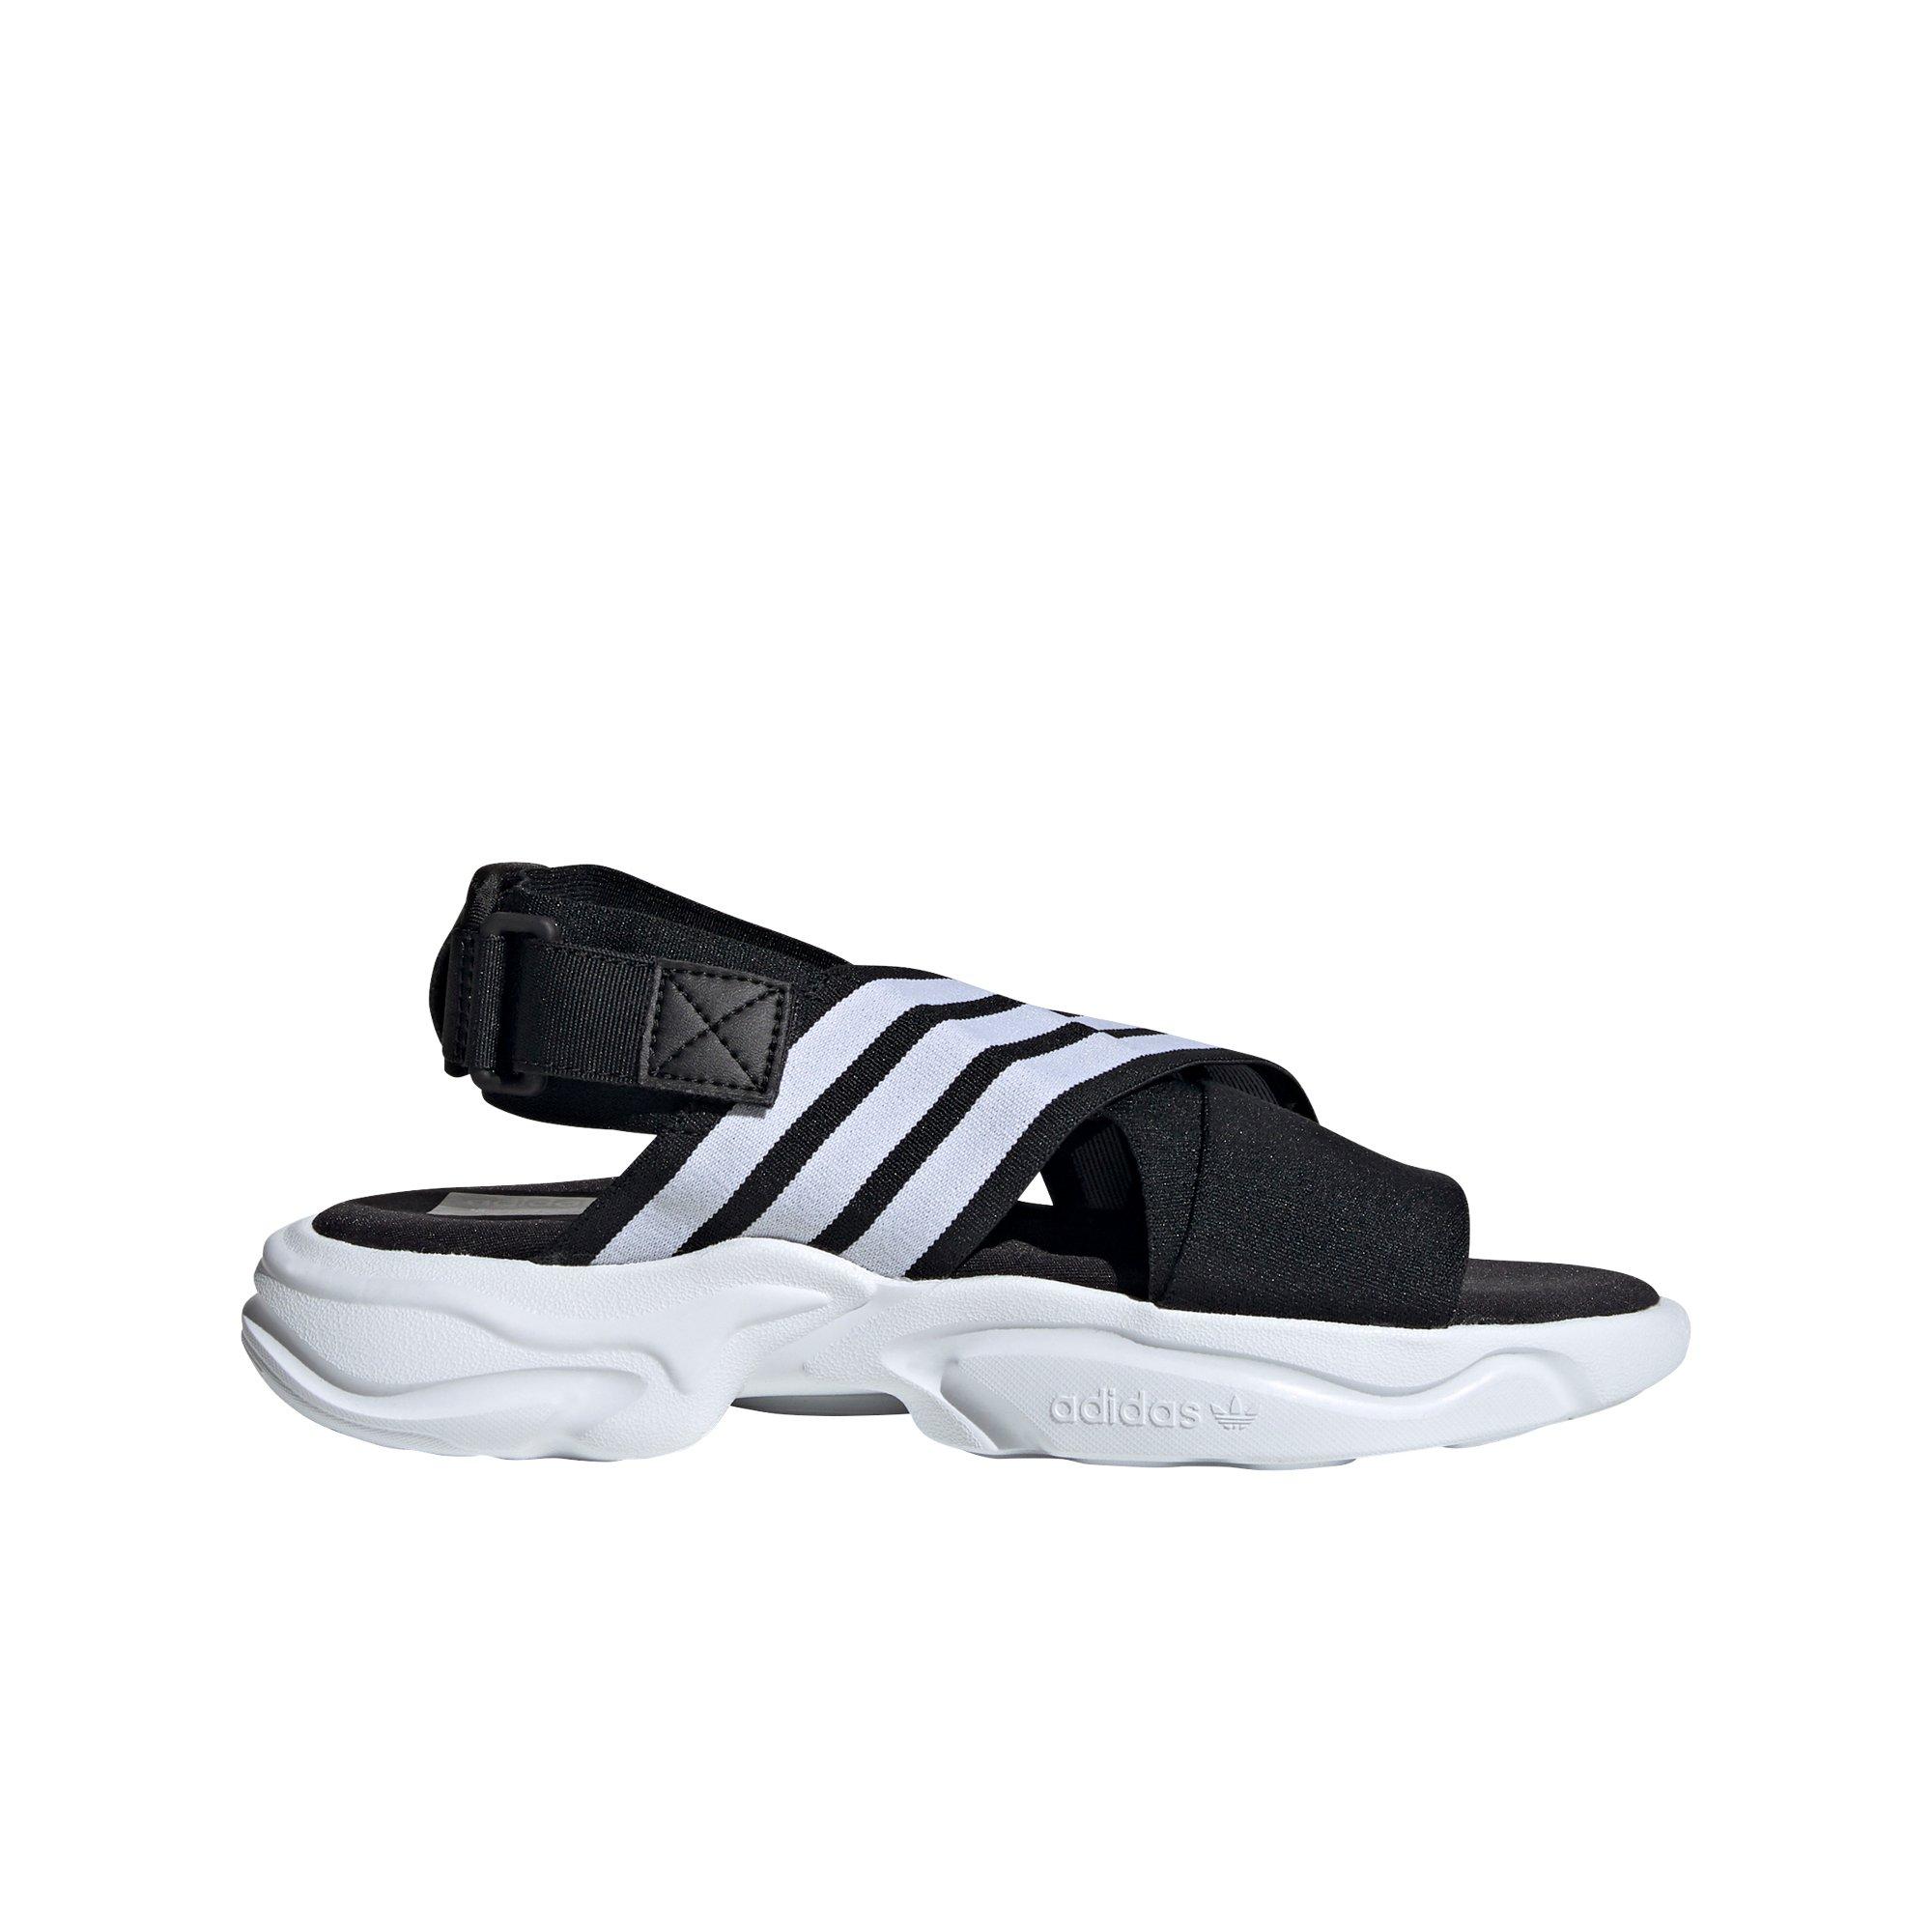 adidas magmur black and white